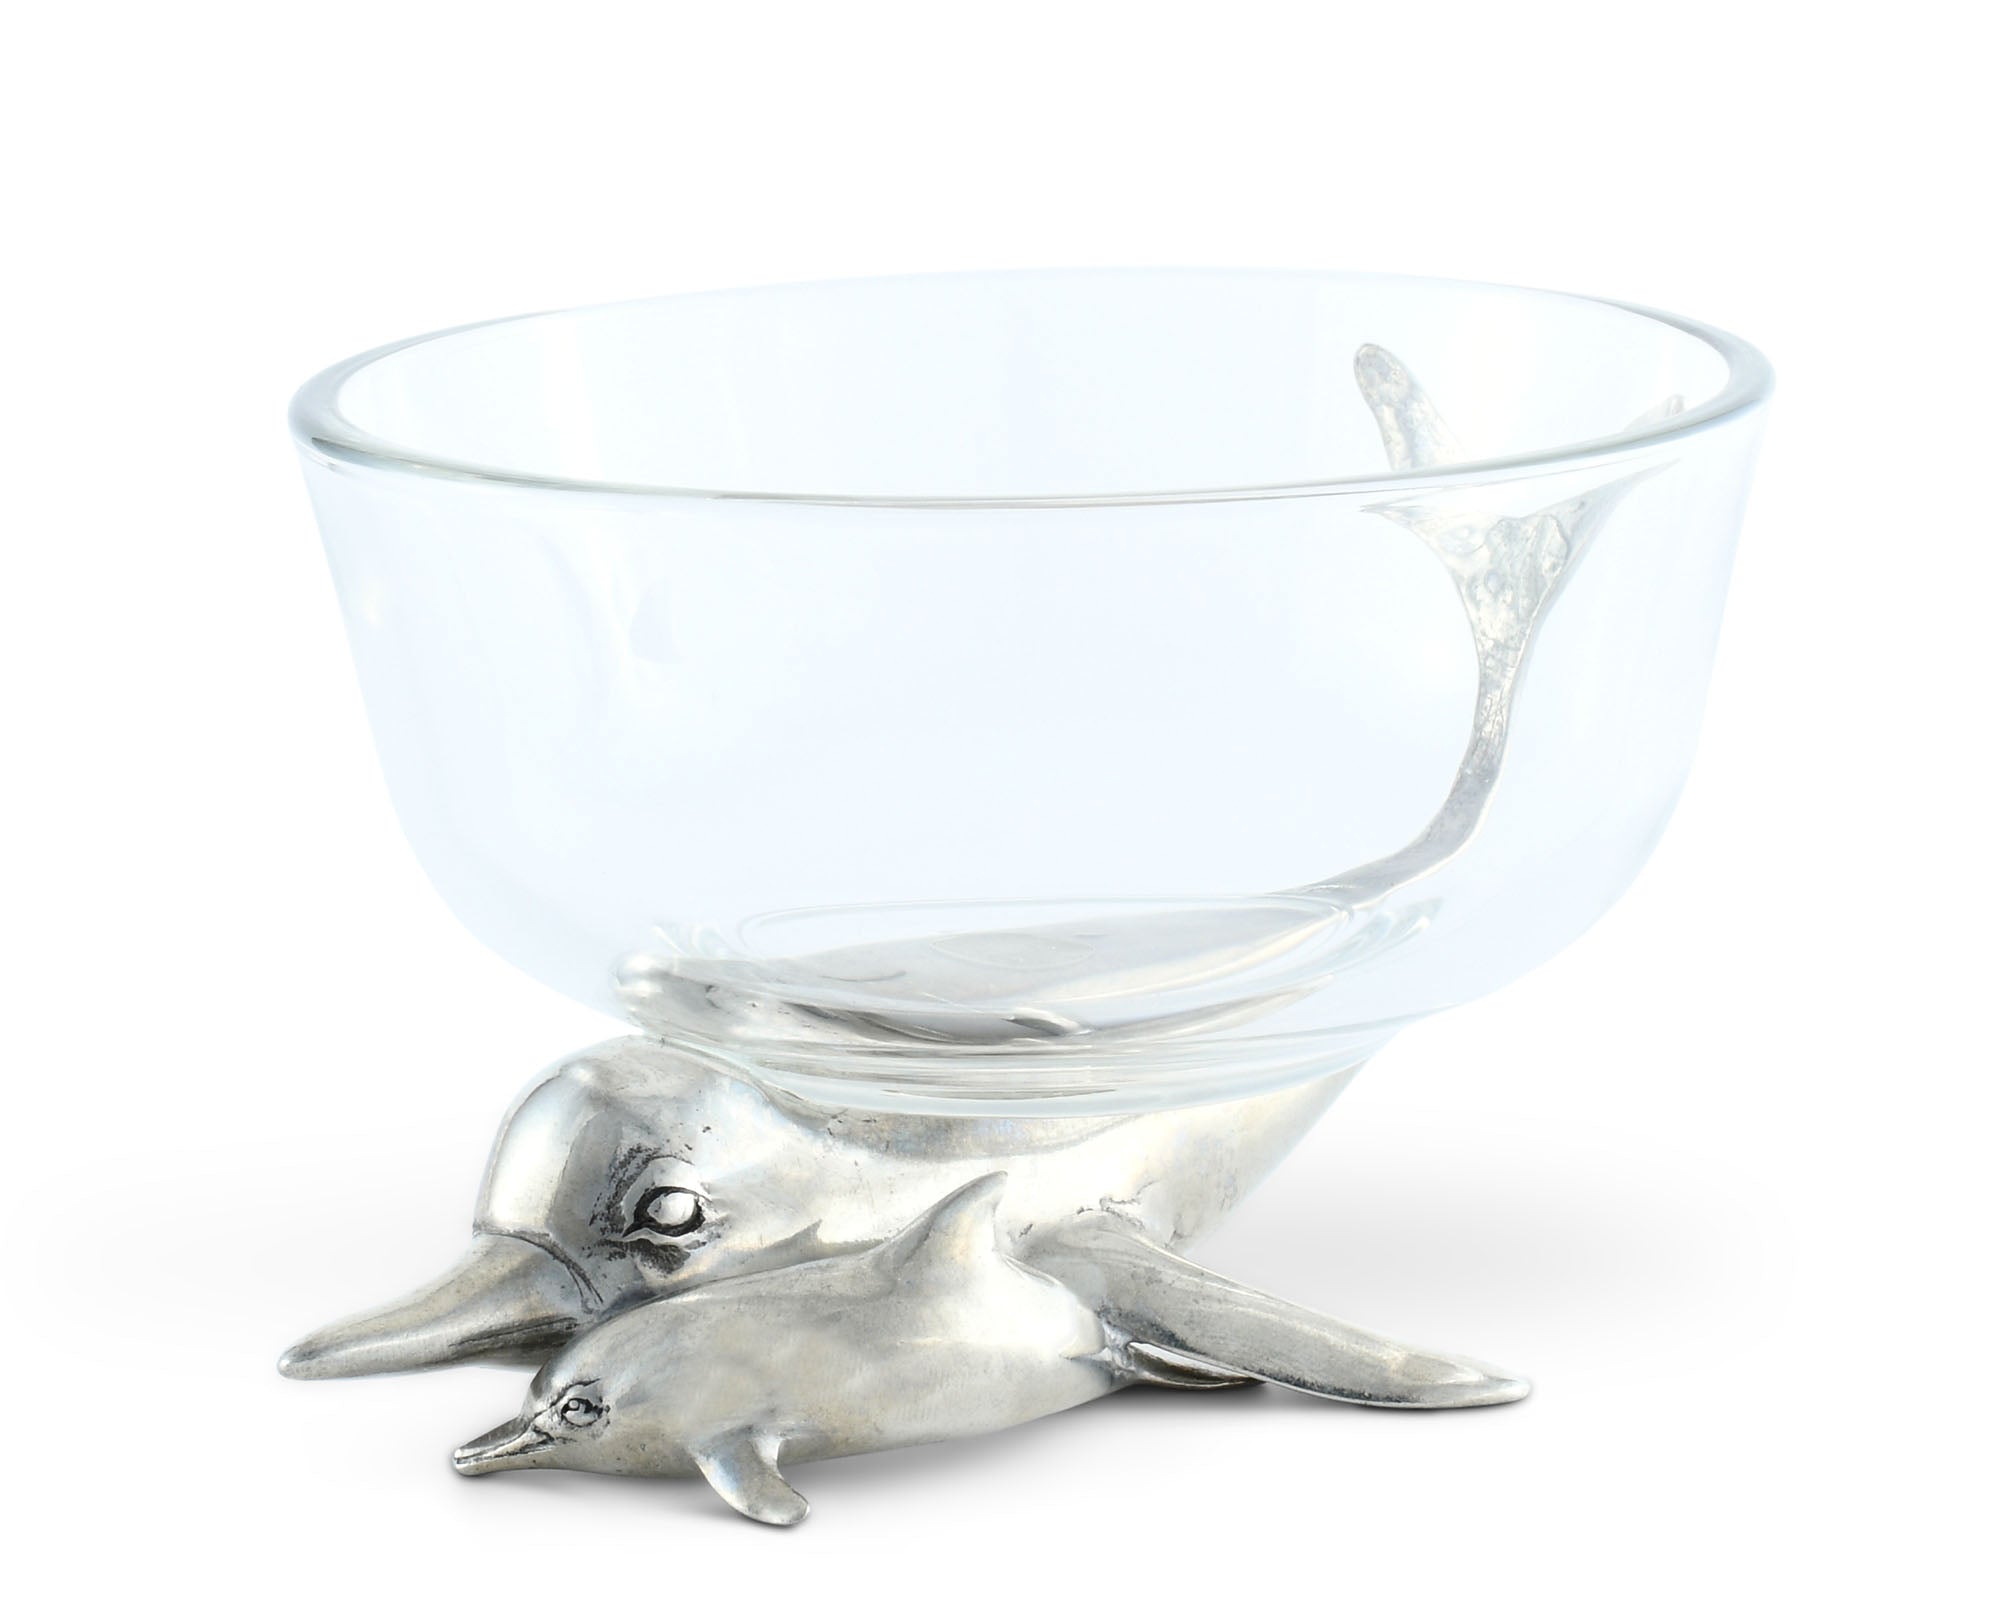 Vagabond House Dolphin Dip Bowl Product Image